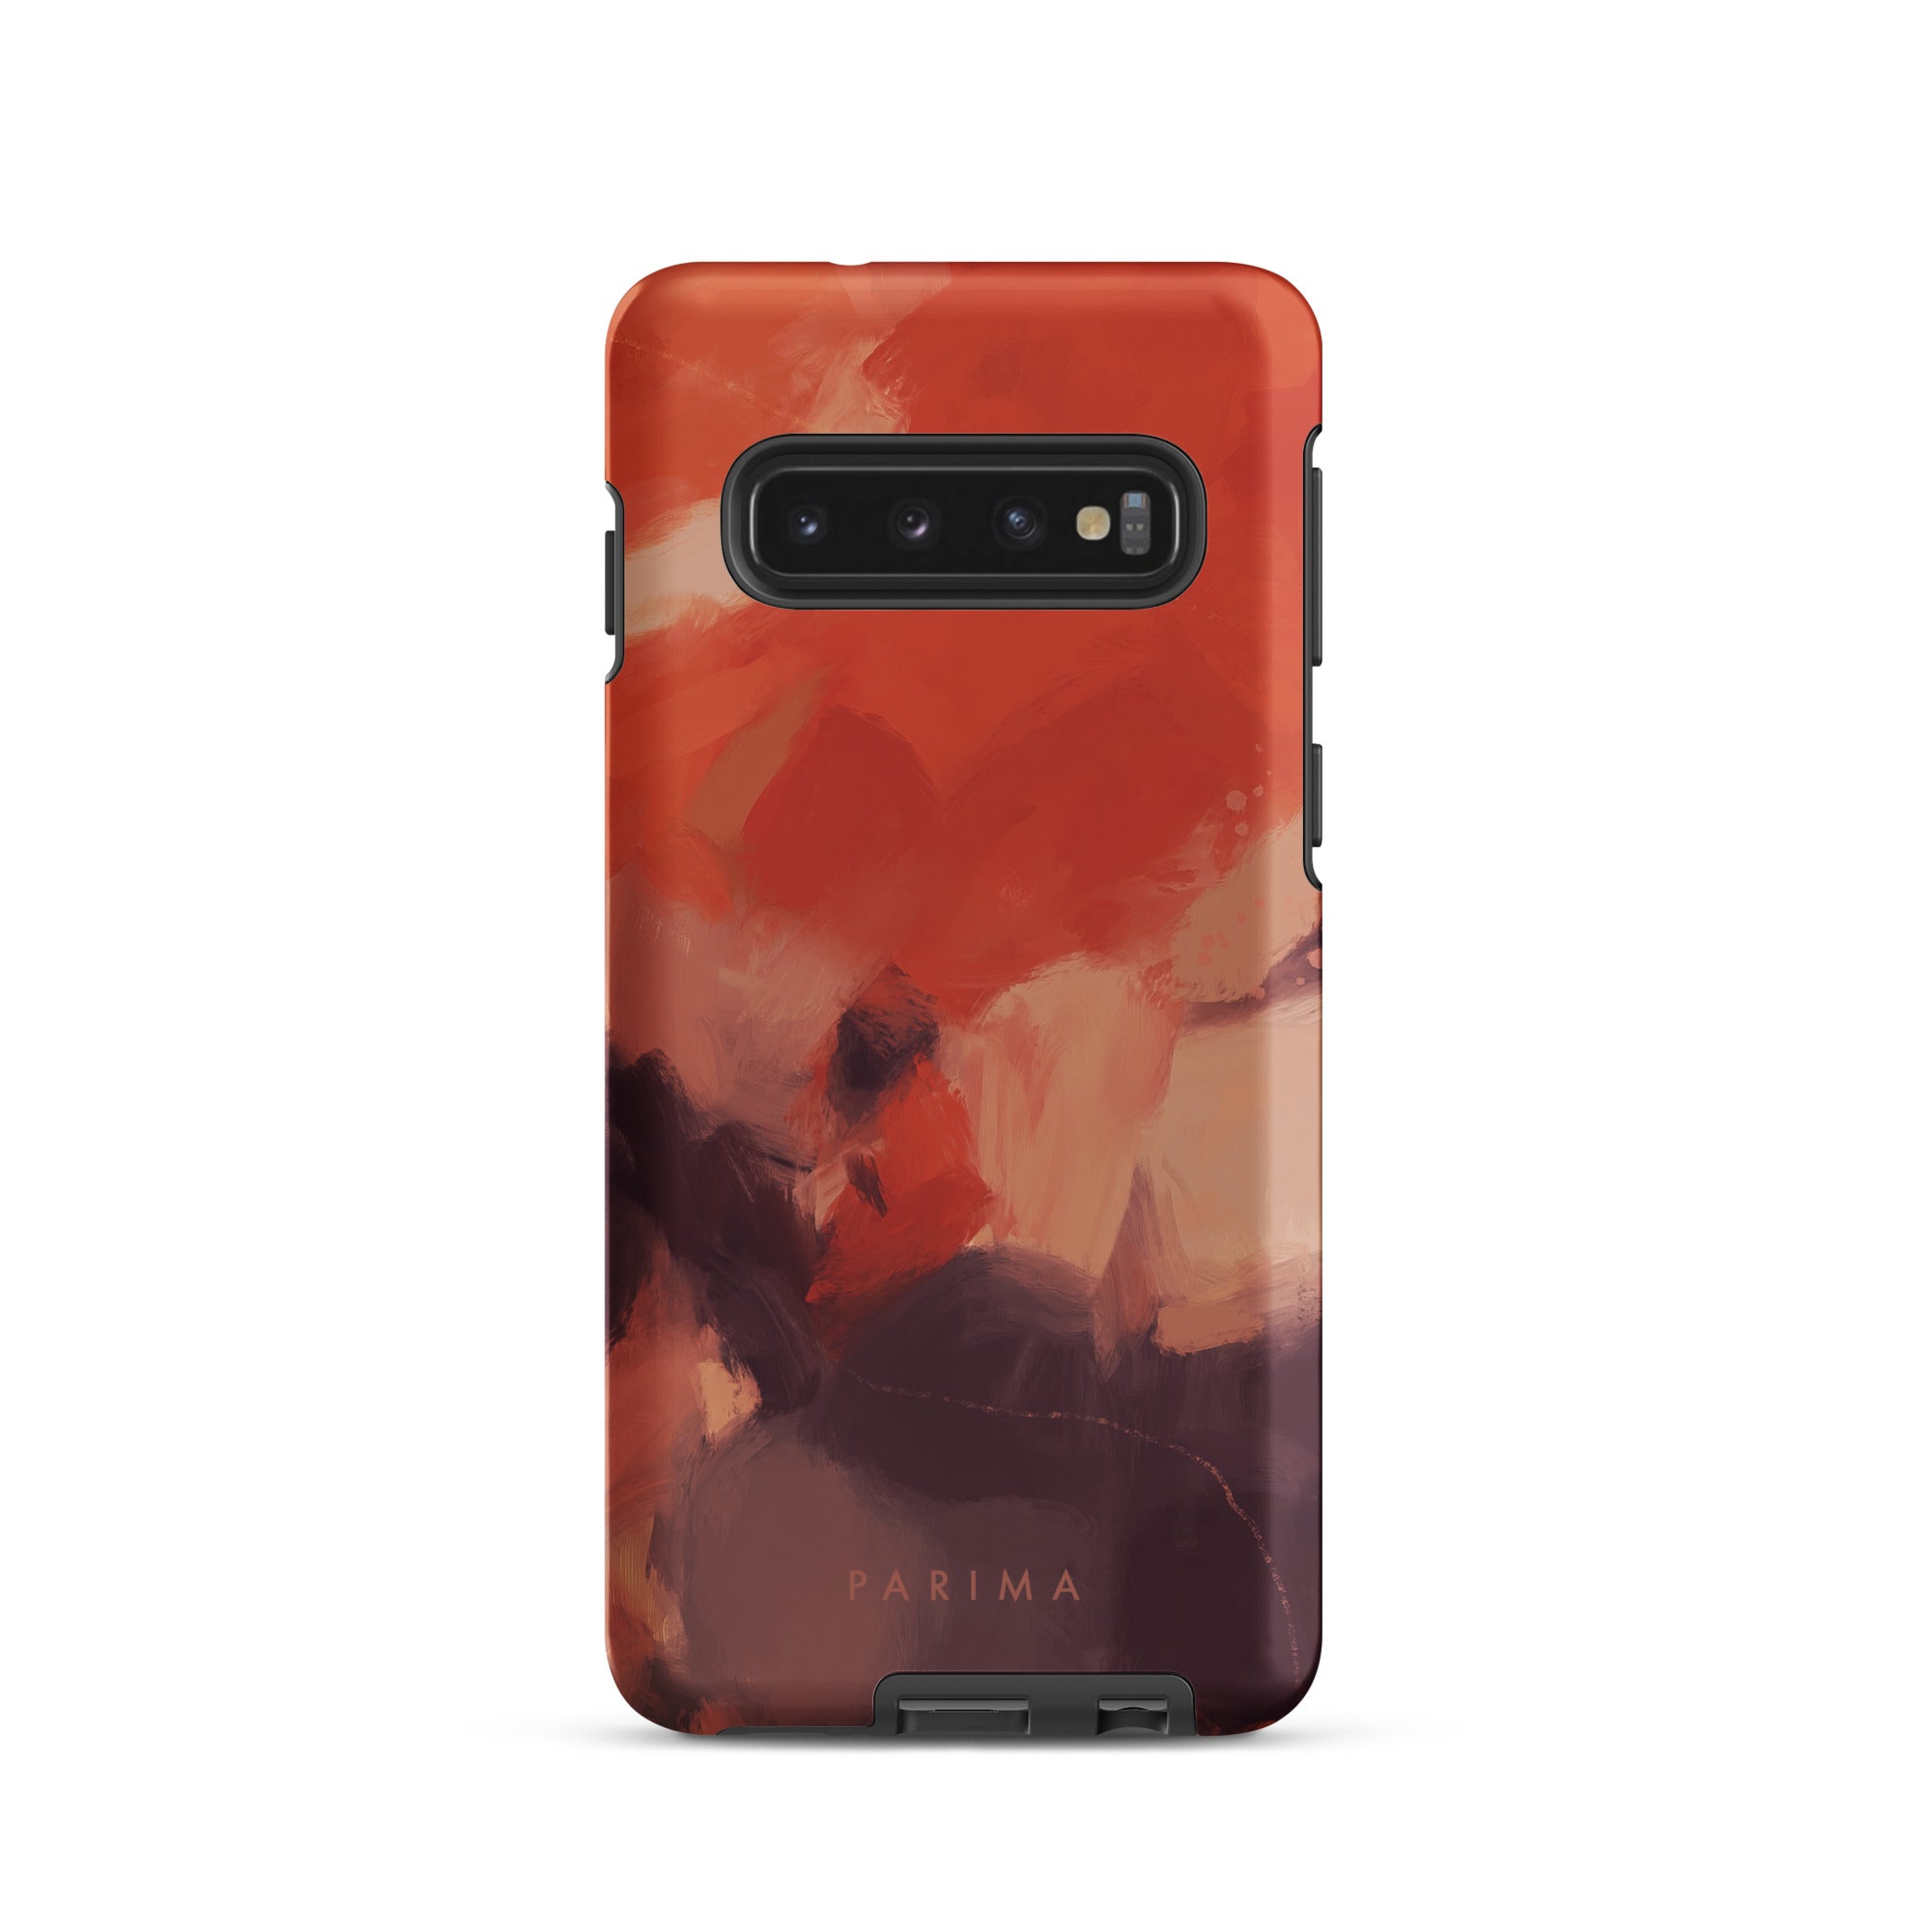 Autumn, orange and purple abstract art on Samsung Galaxy S10 tough case by Parima Studio